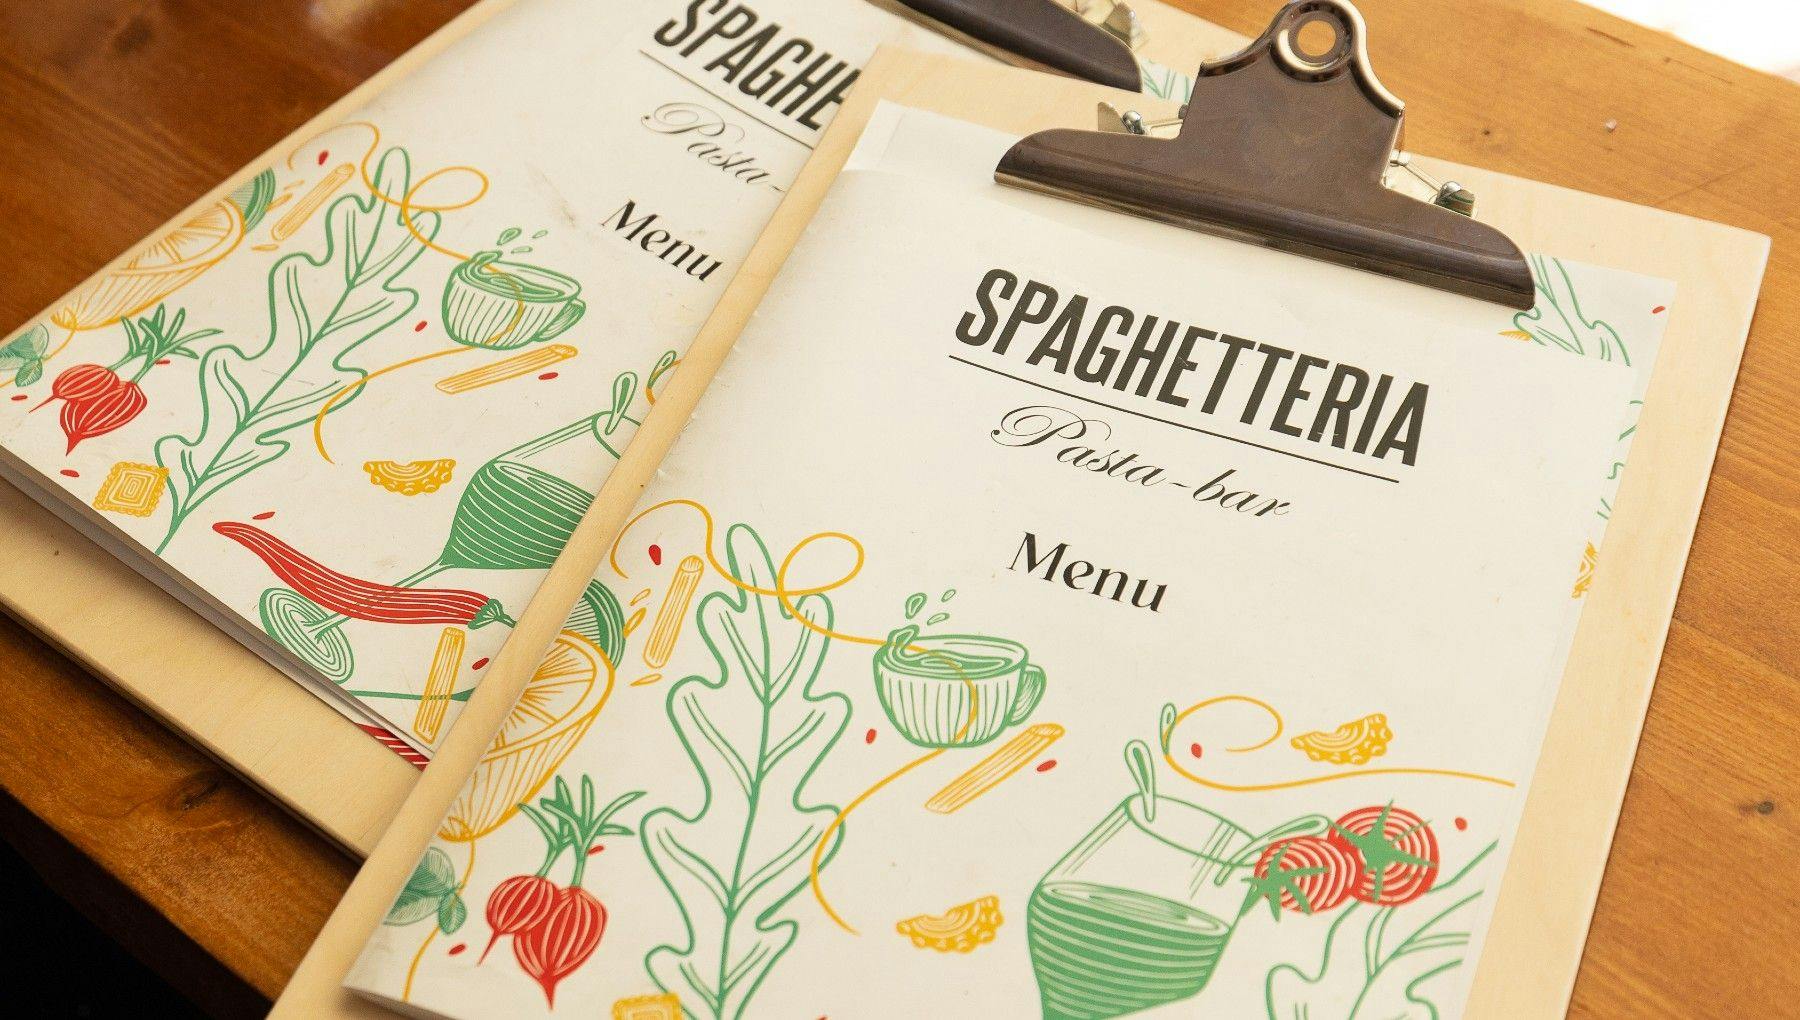 Spaghetteria Caffè menus